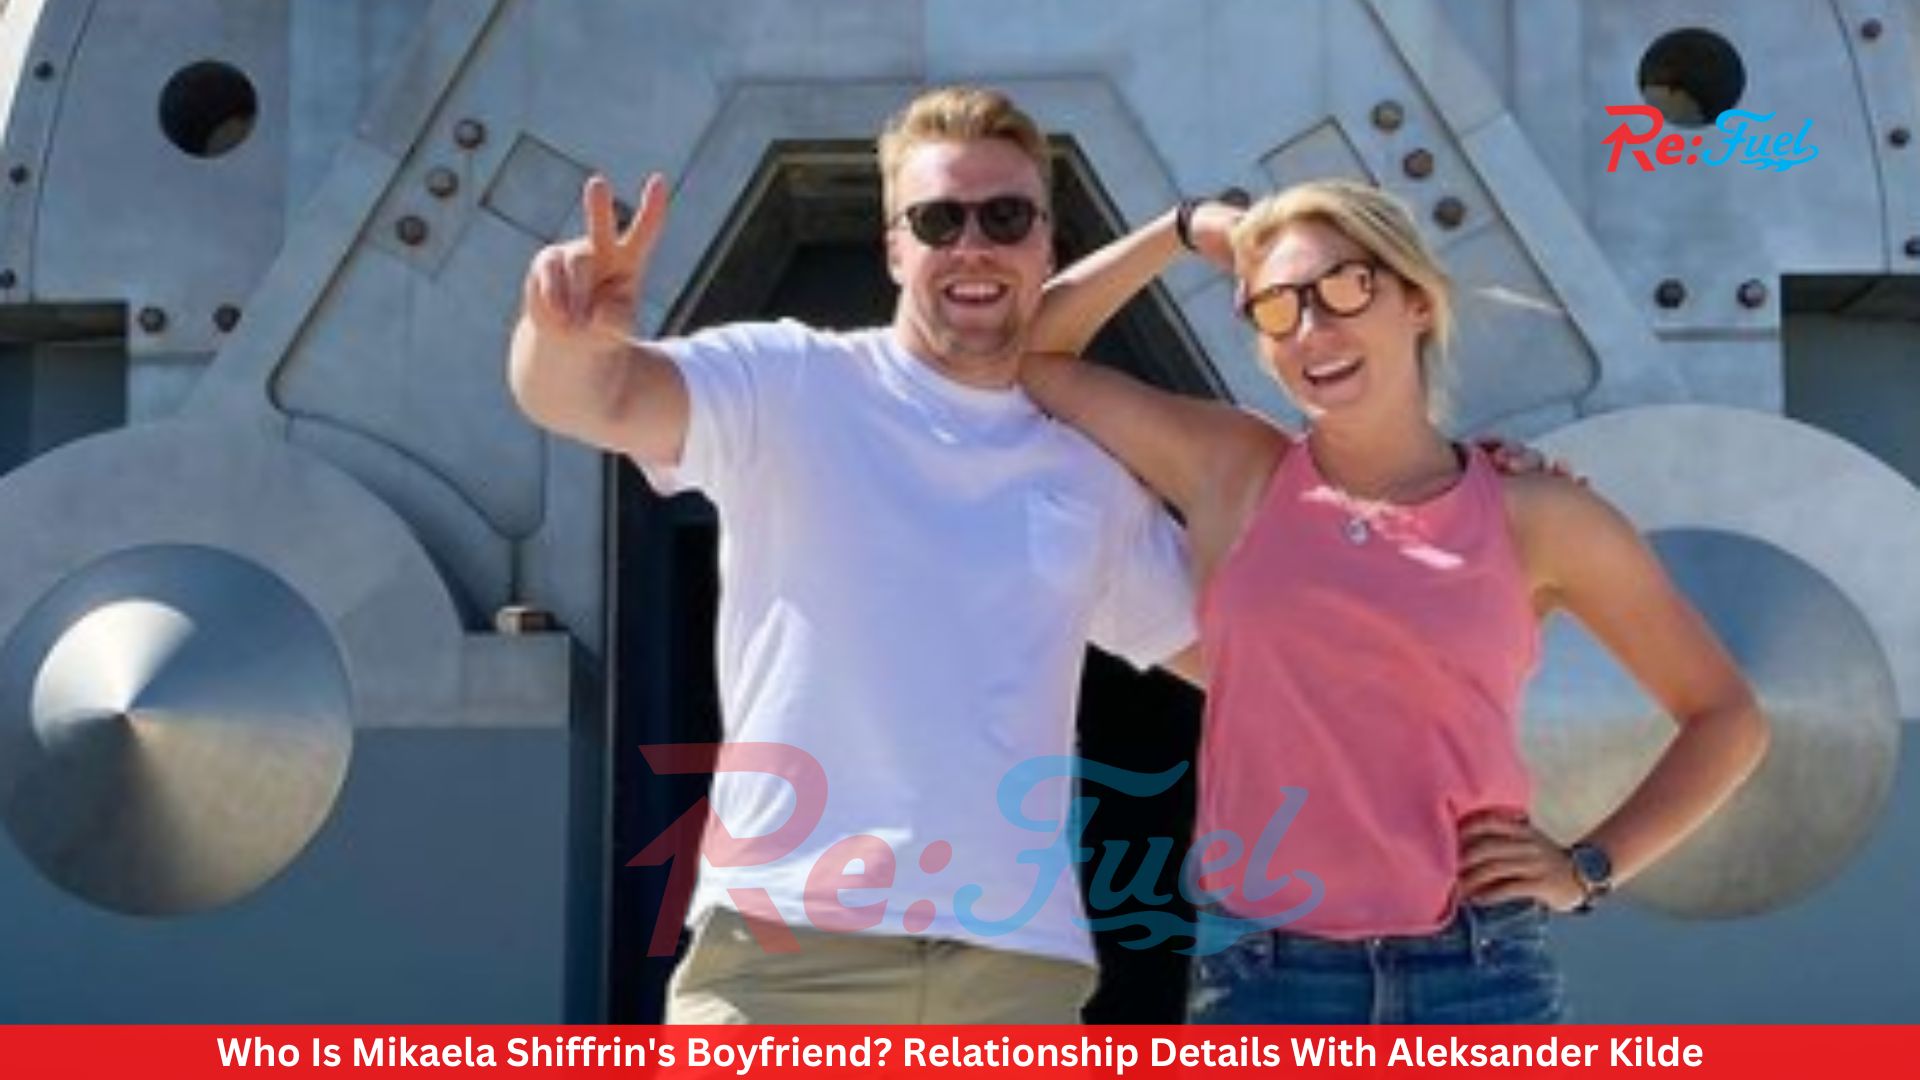 Who Is Mikaela Shiffrin's Boyfriend? Relationship Details With Aleksander Kilde